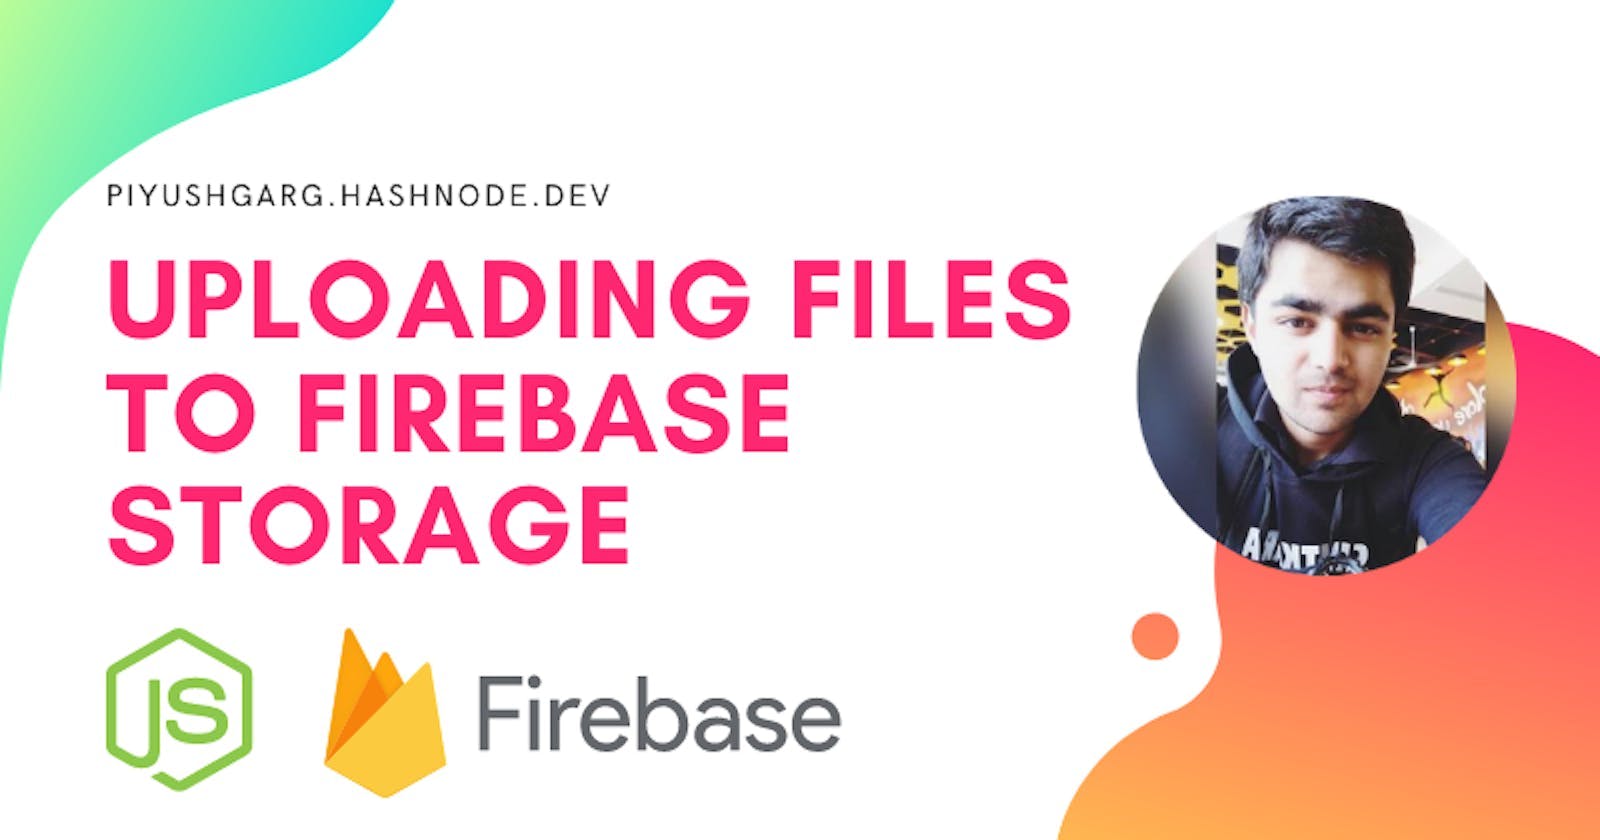 Uploading images to firebase storage with node.js